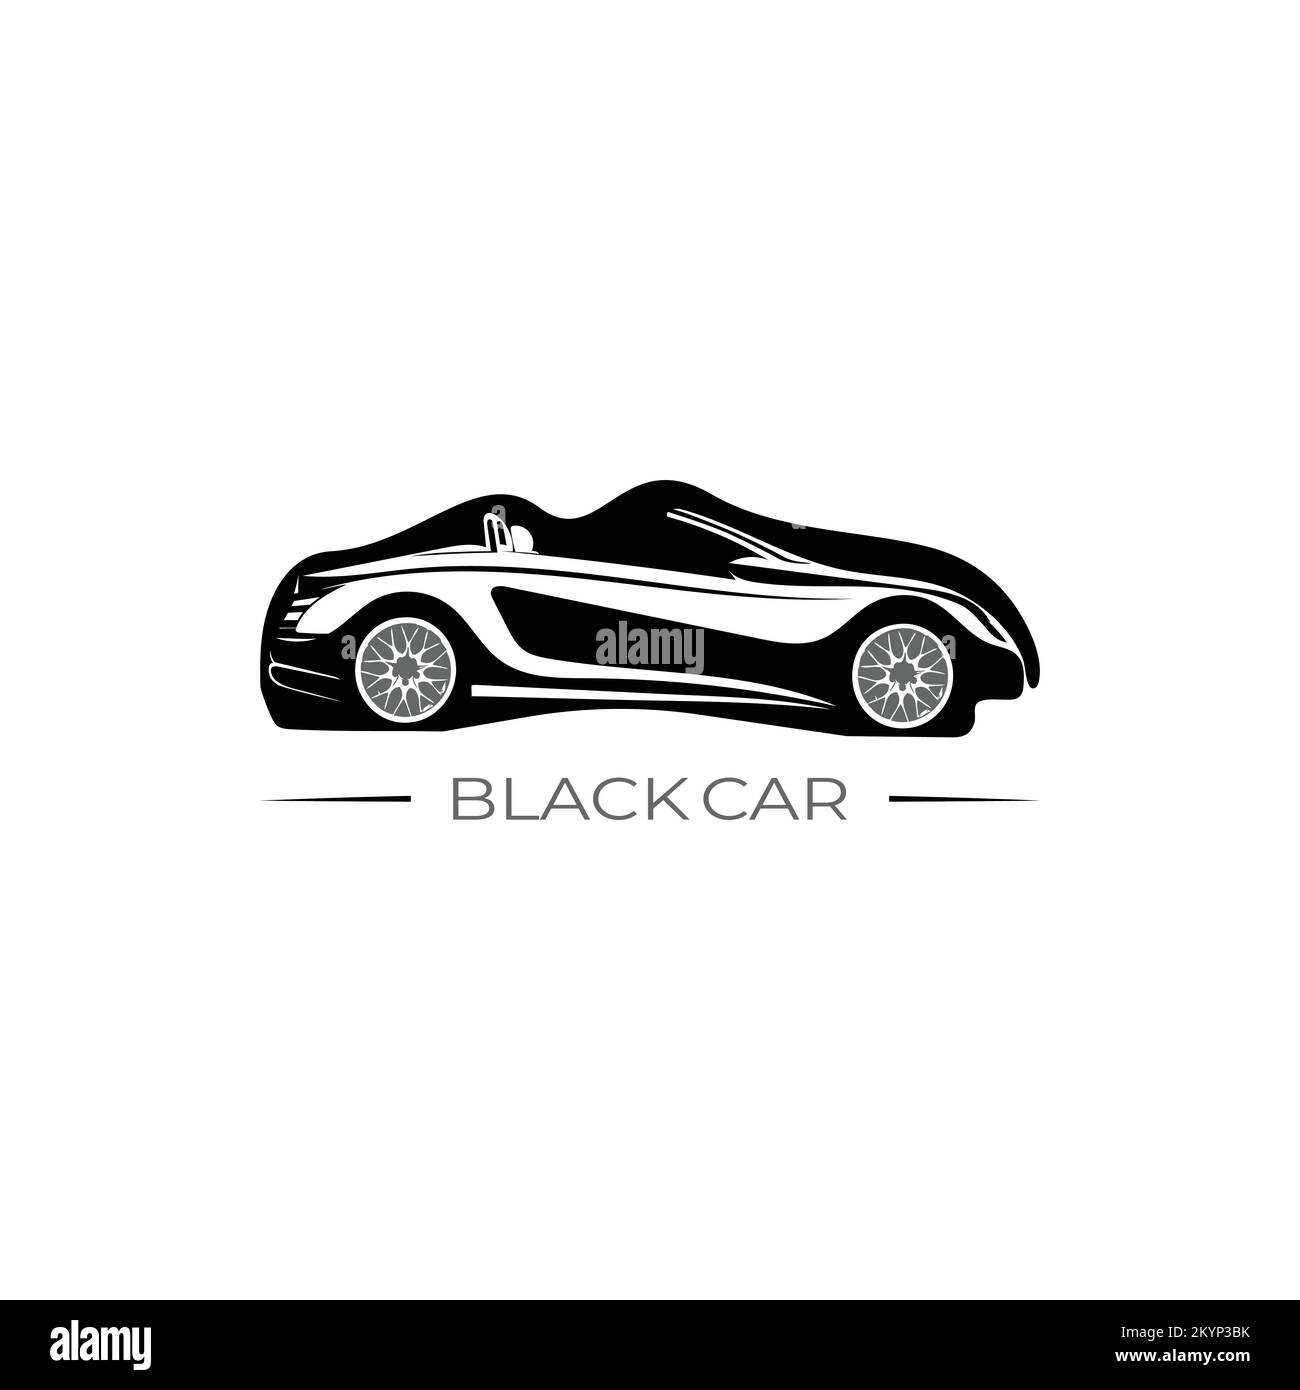 Automobile black car logo design with a white background Stock Vector